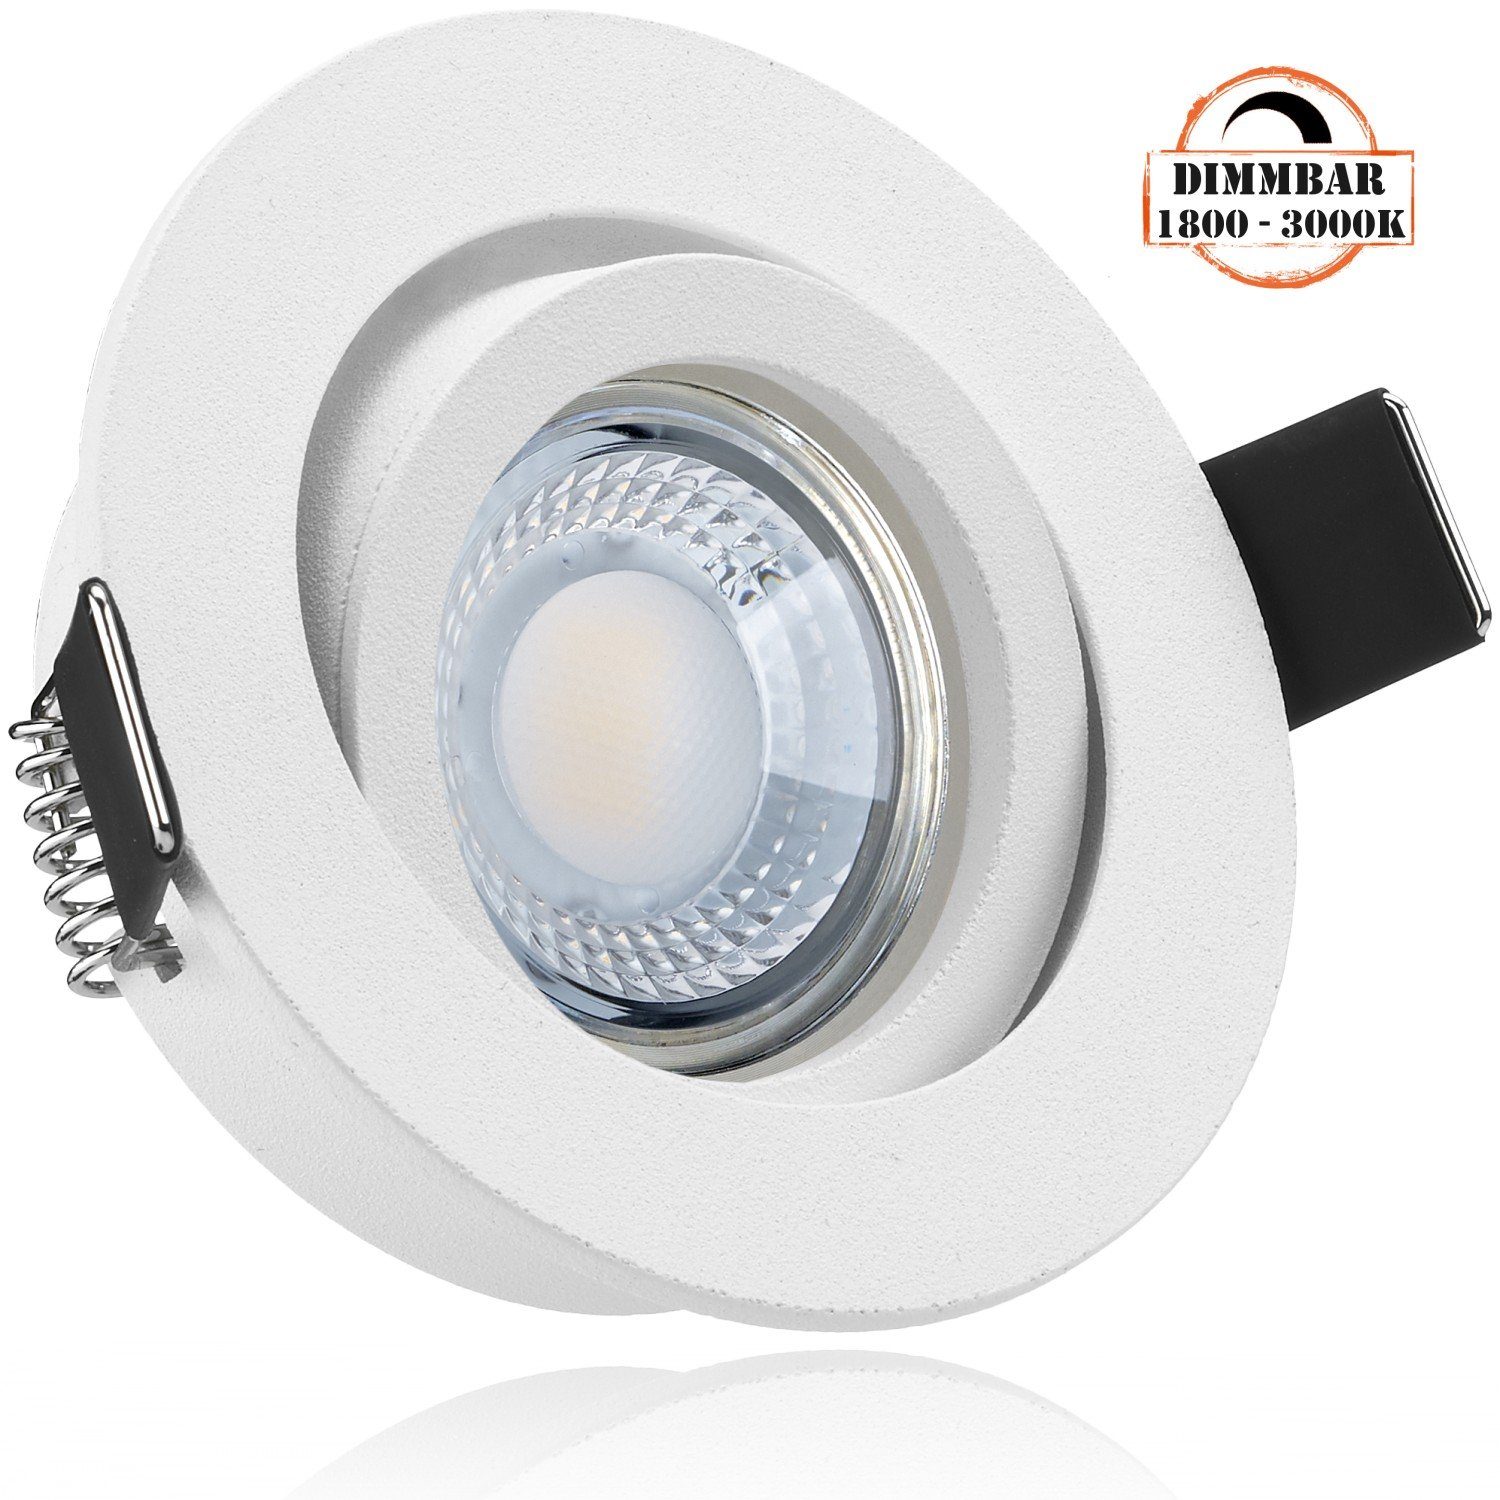 matt Set Einbaustrahler weiß LED mit Einbaustrahler LED von LEDANDO LEDANDO extra in LED flach 5W